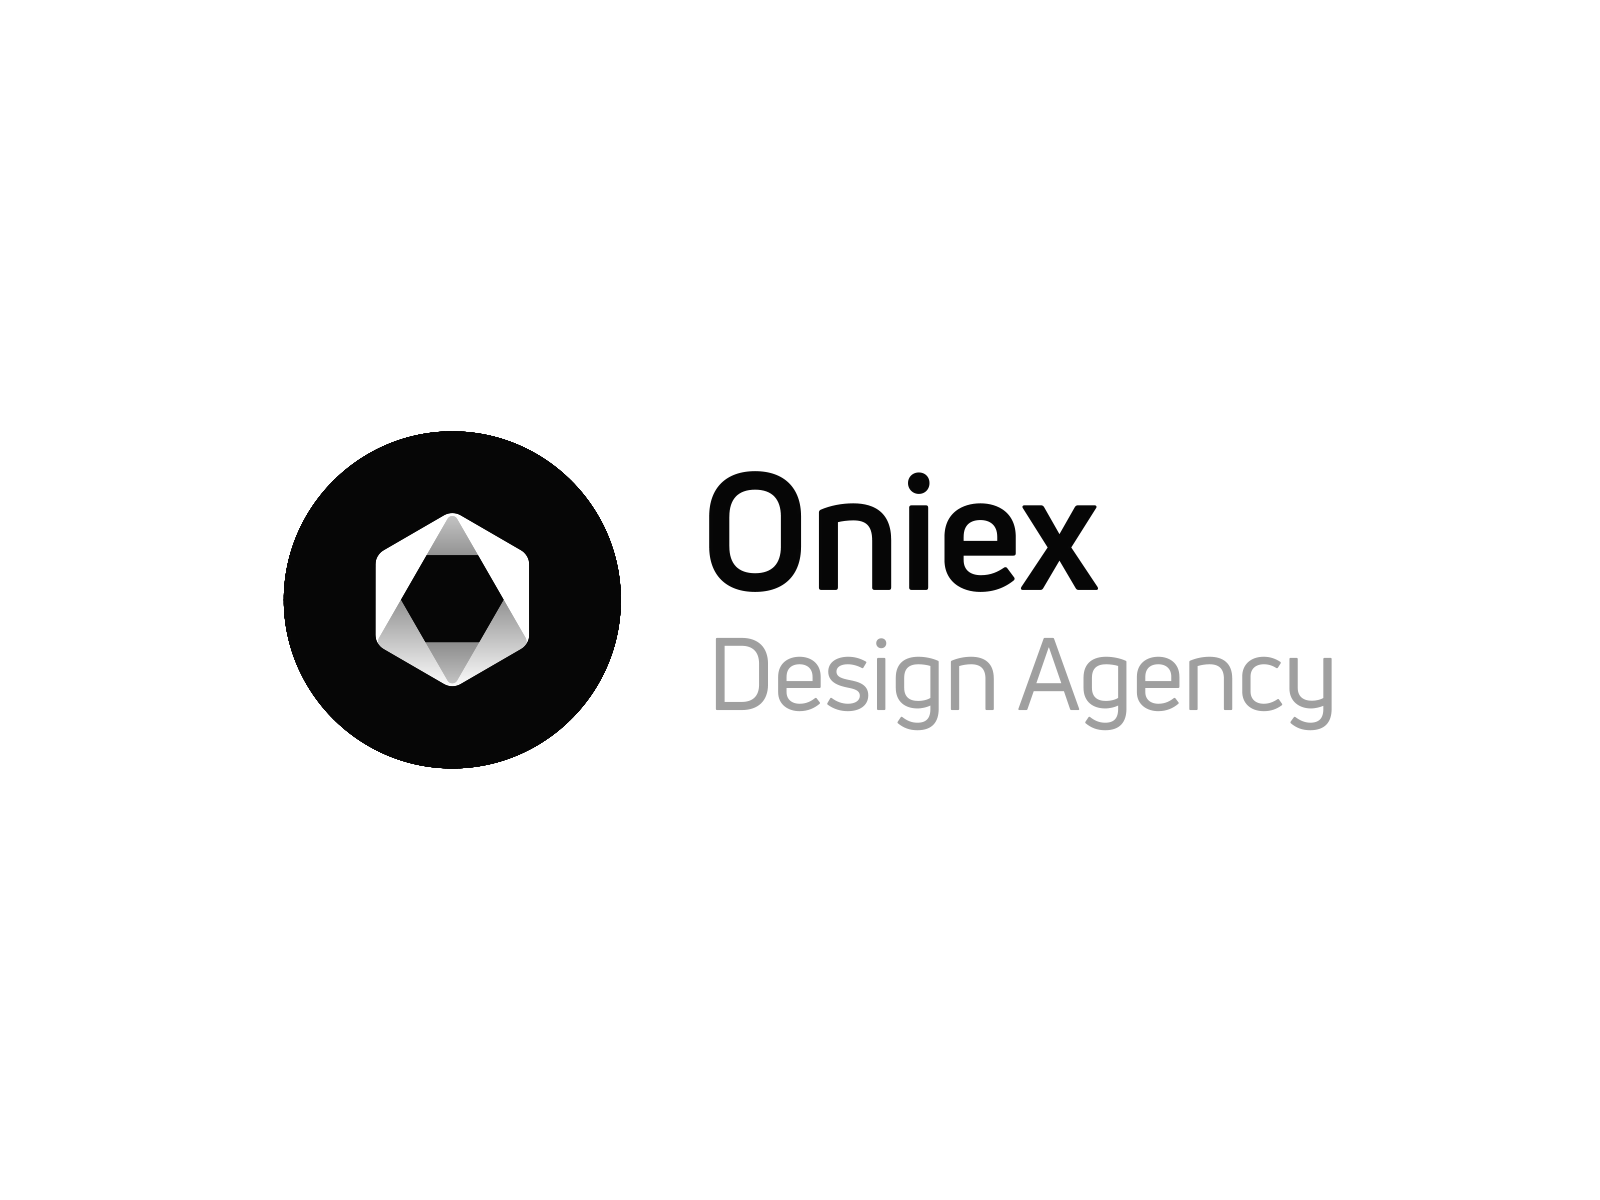 Oniex logo animation by Javadtaklif for Oniex™ on Dribbble